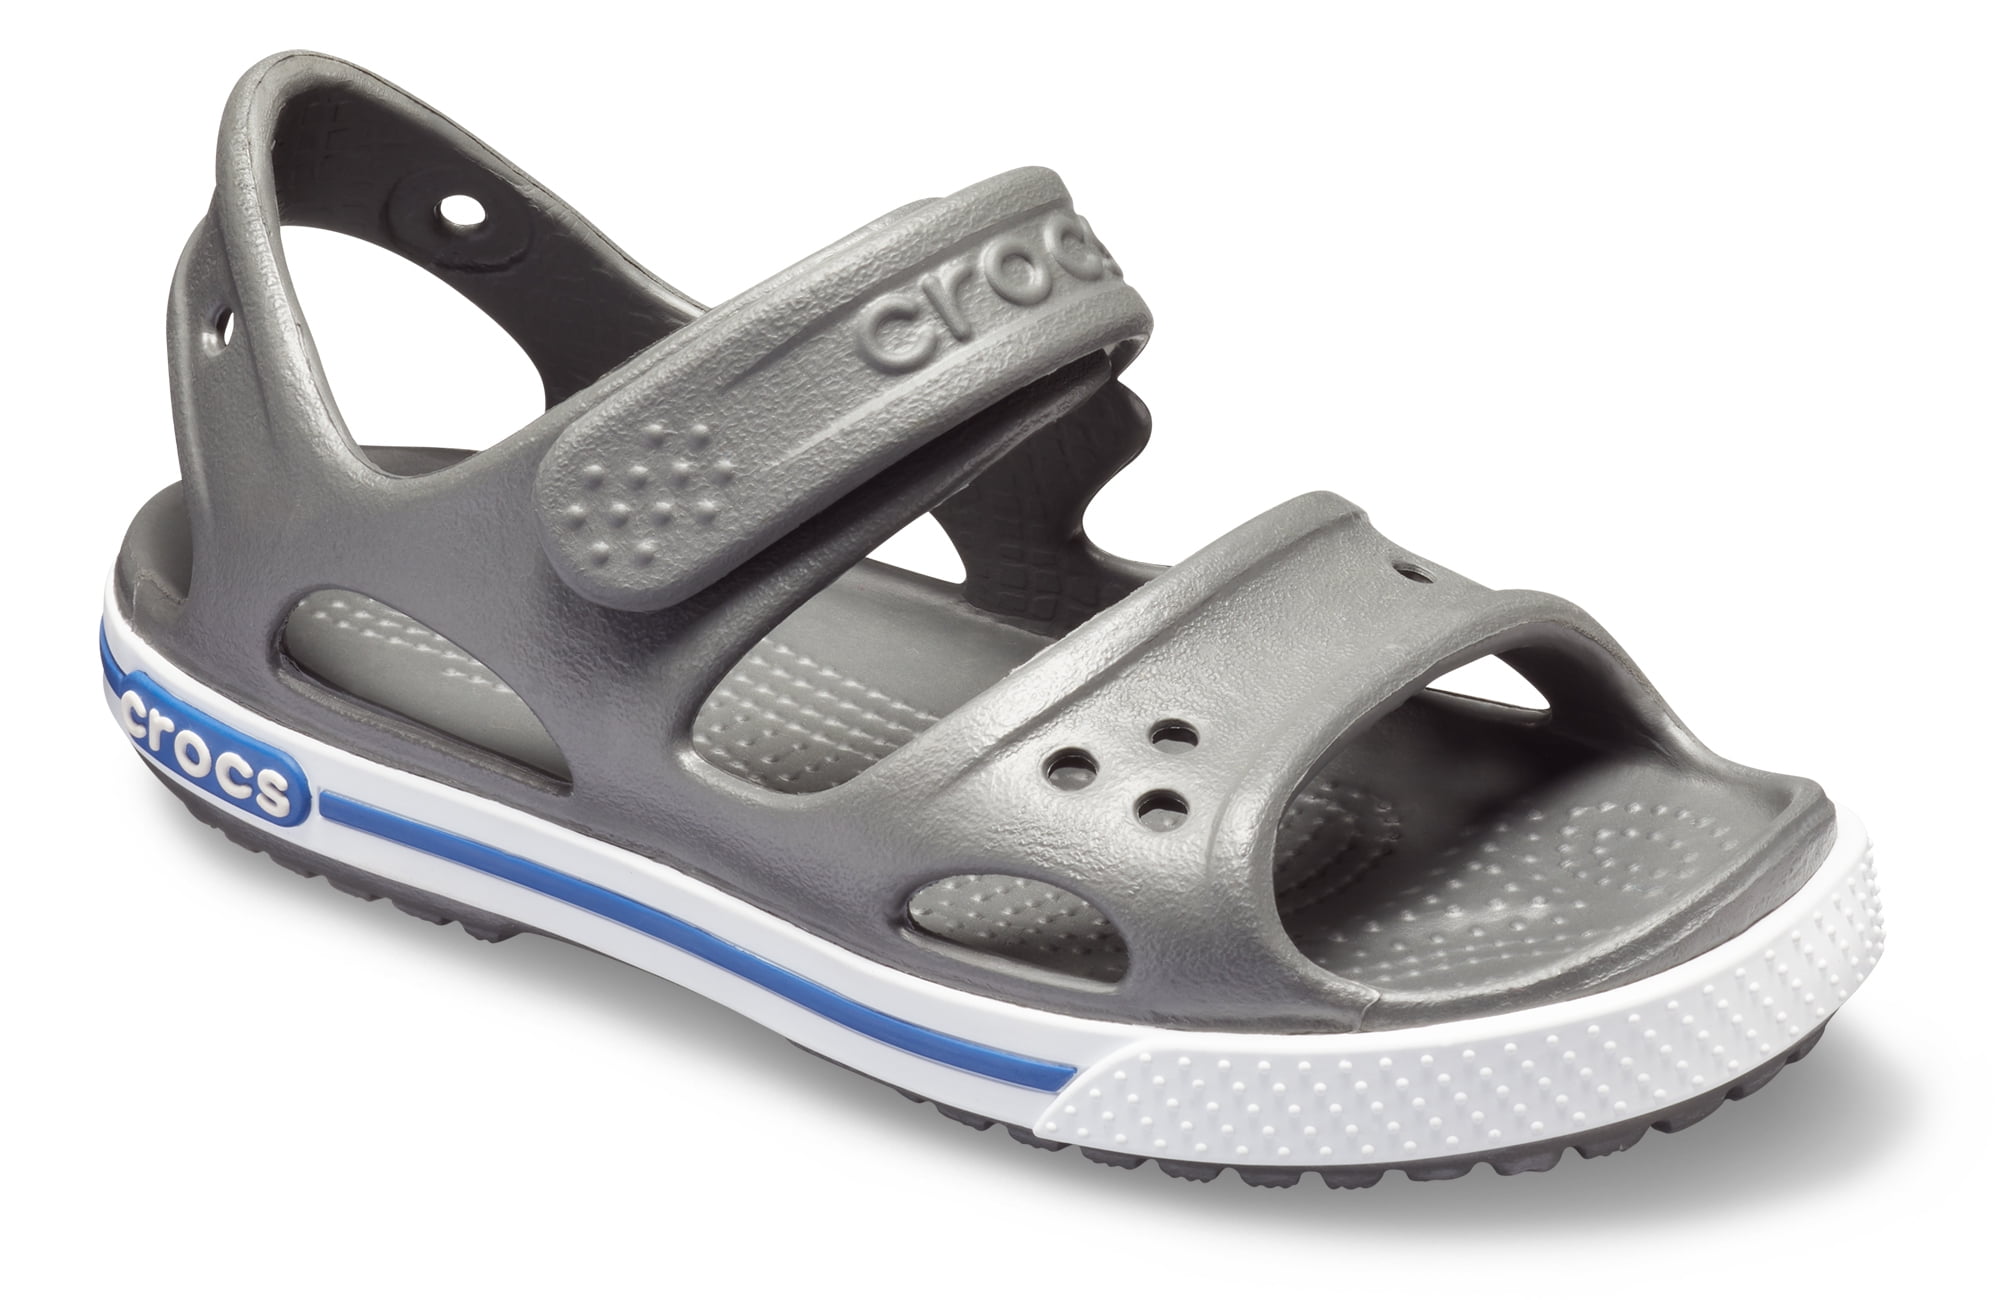 Size 8 In Crocs